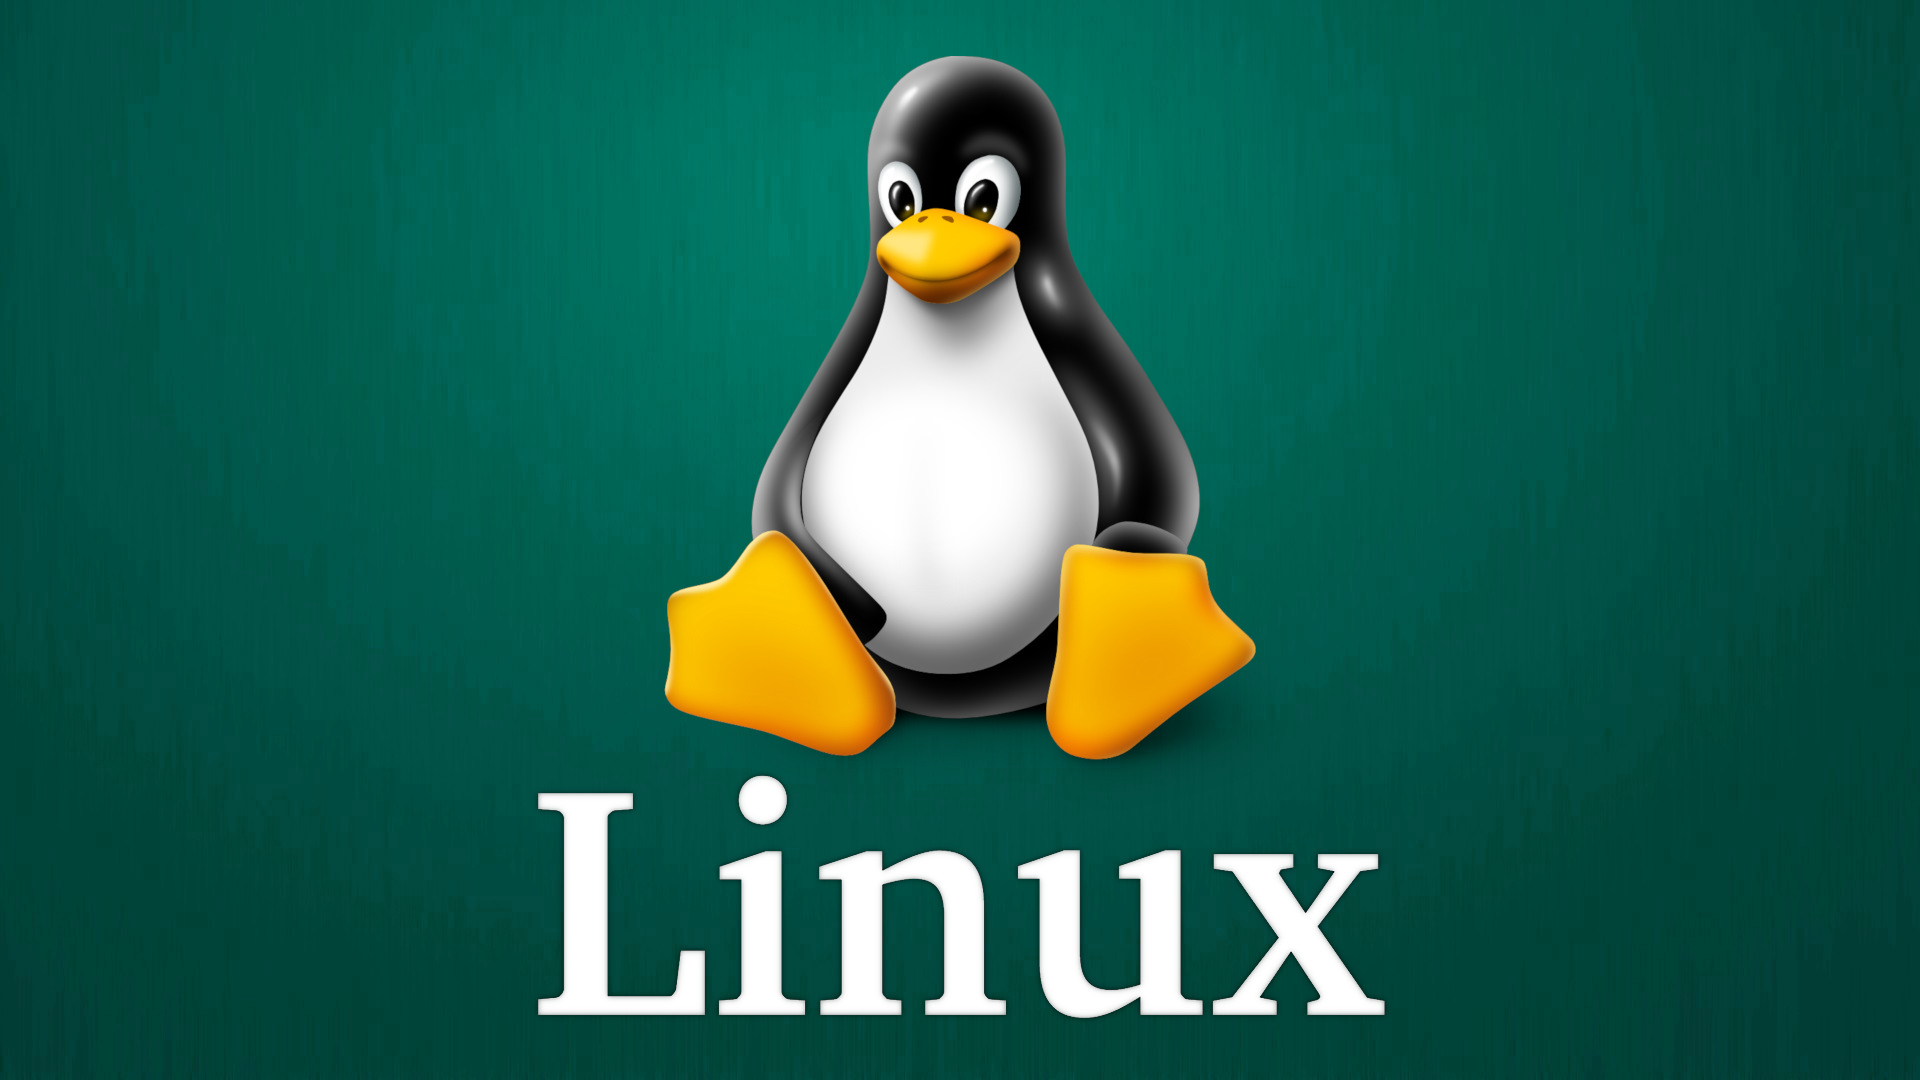 ОС семейства Linux